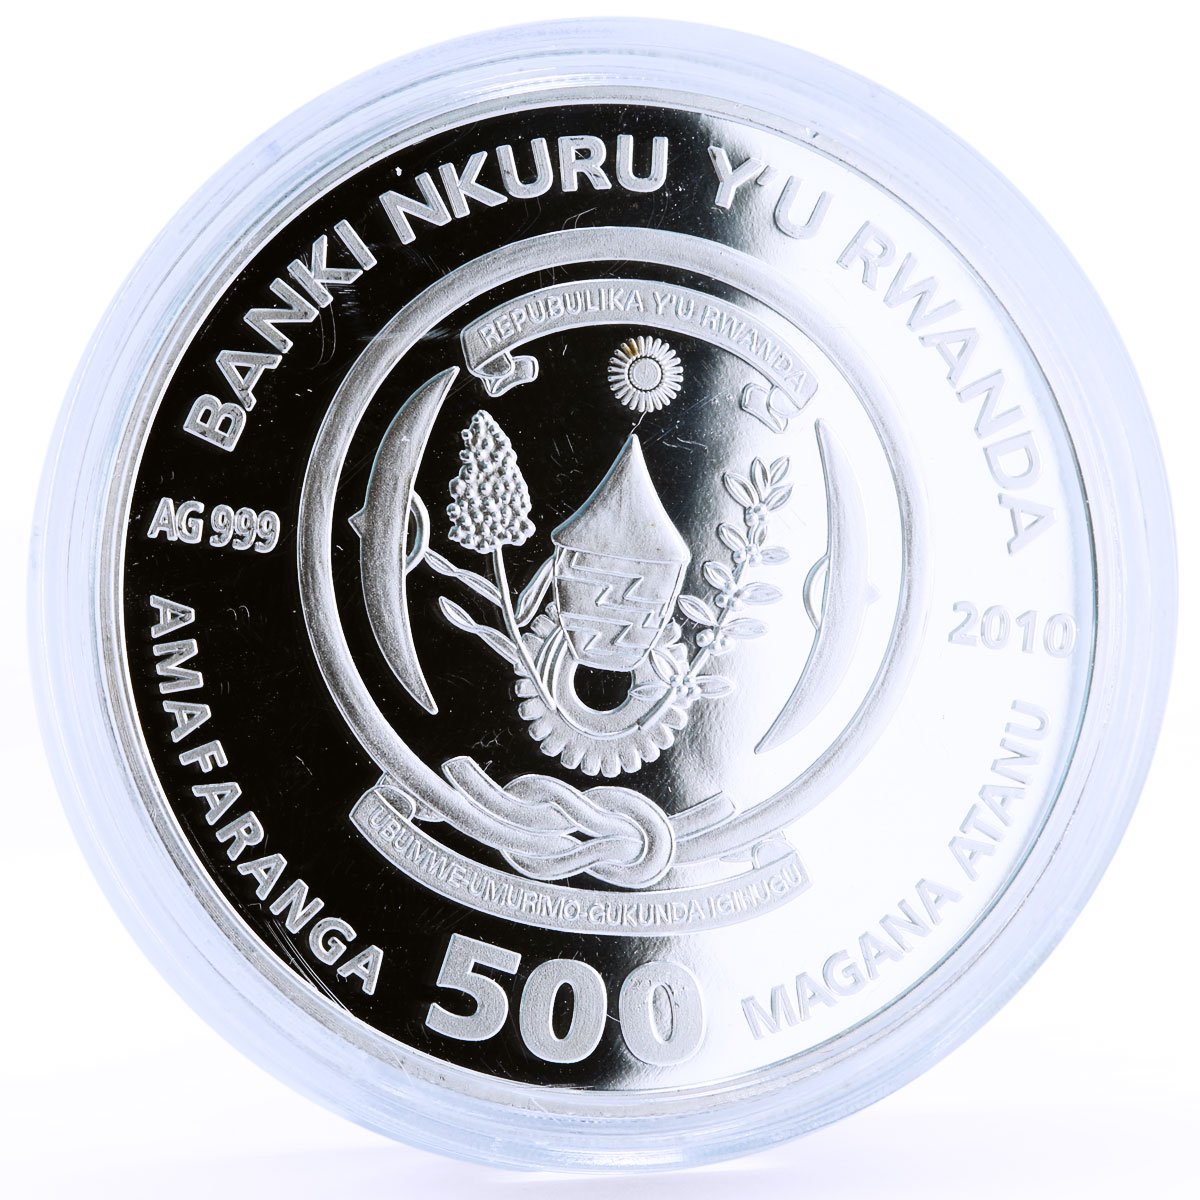 Rwanda 500 francs Marine Live Mydas Turtle Fauna colored silver coin 2010